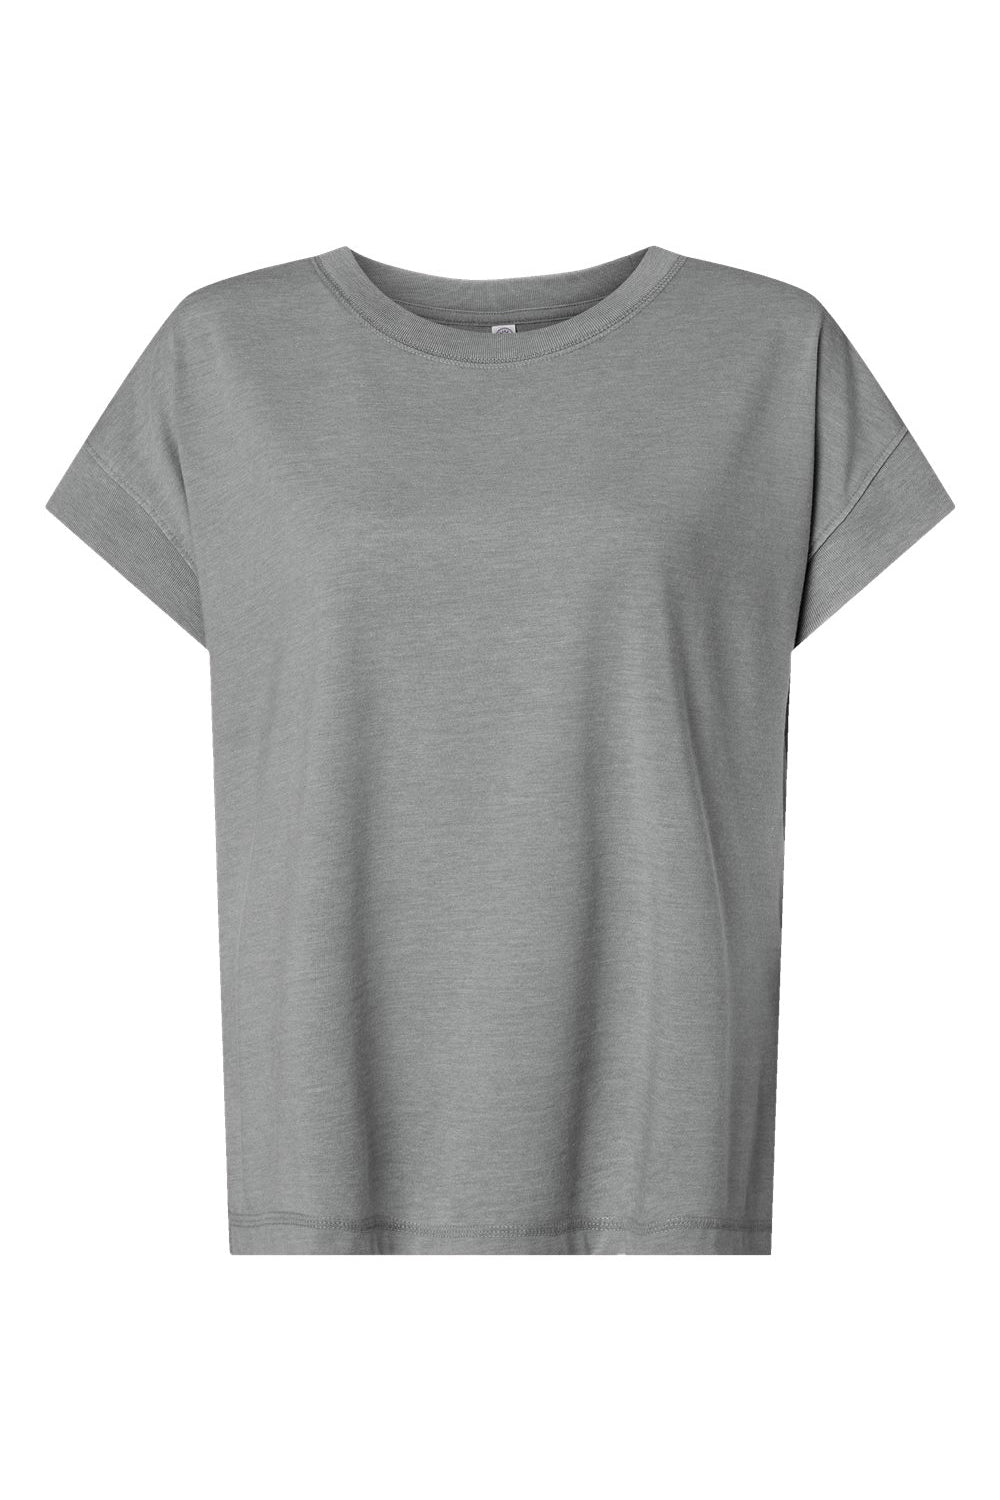 LAT 3502 Womens Relaxed Vintage Wash Short Sleeve Crewneck T-Shirt Grey Flat Front